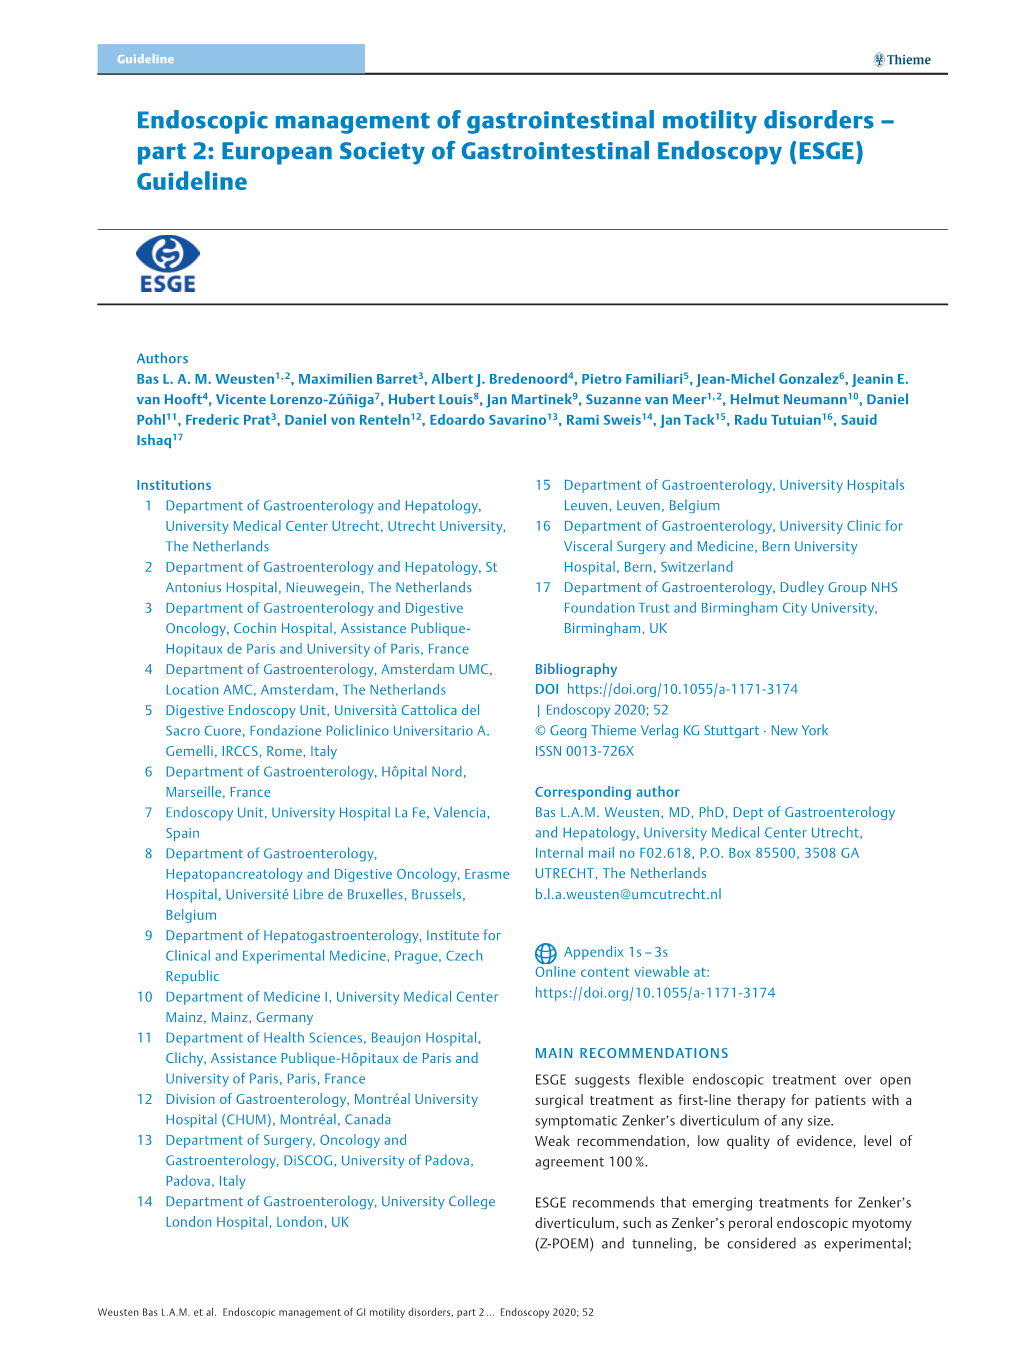 Endoscopic Management of Gastrointestinal Motility Disorders – Part 2: European Society of Gastrointestinal Endoscopy (ESGE) Guideline